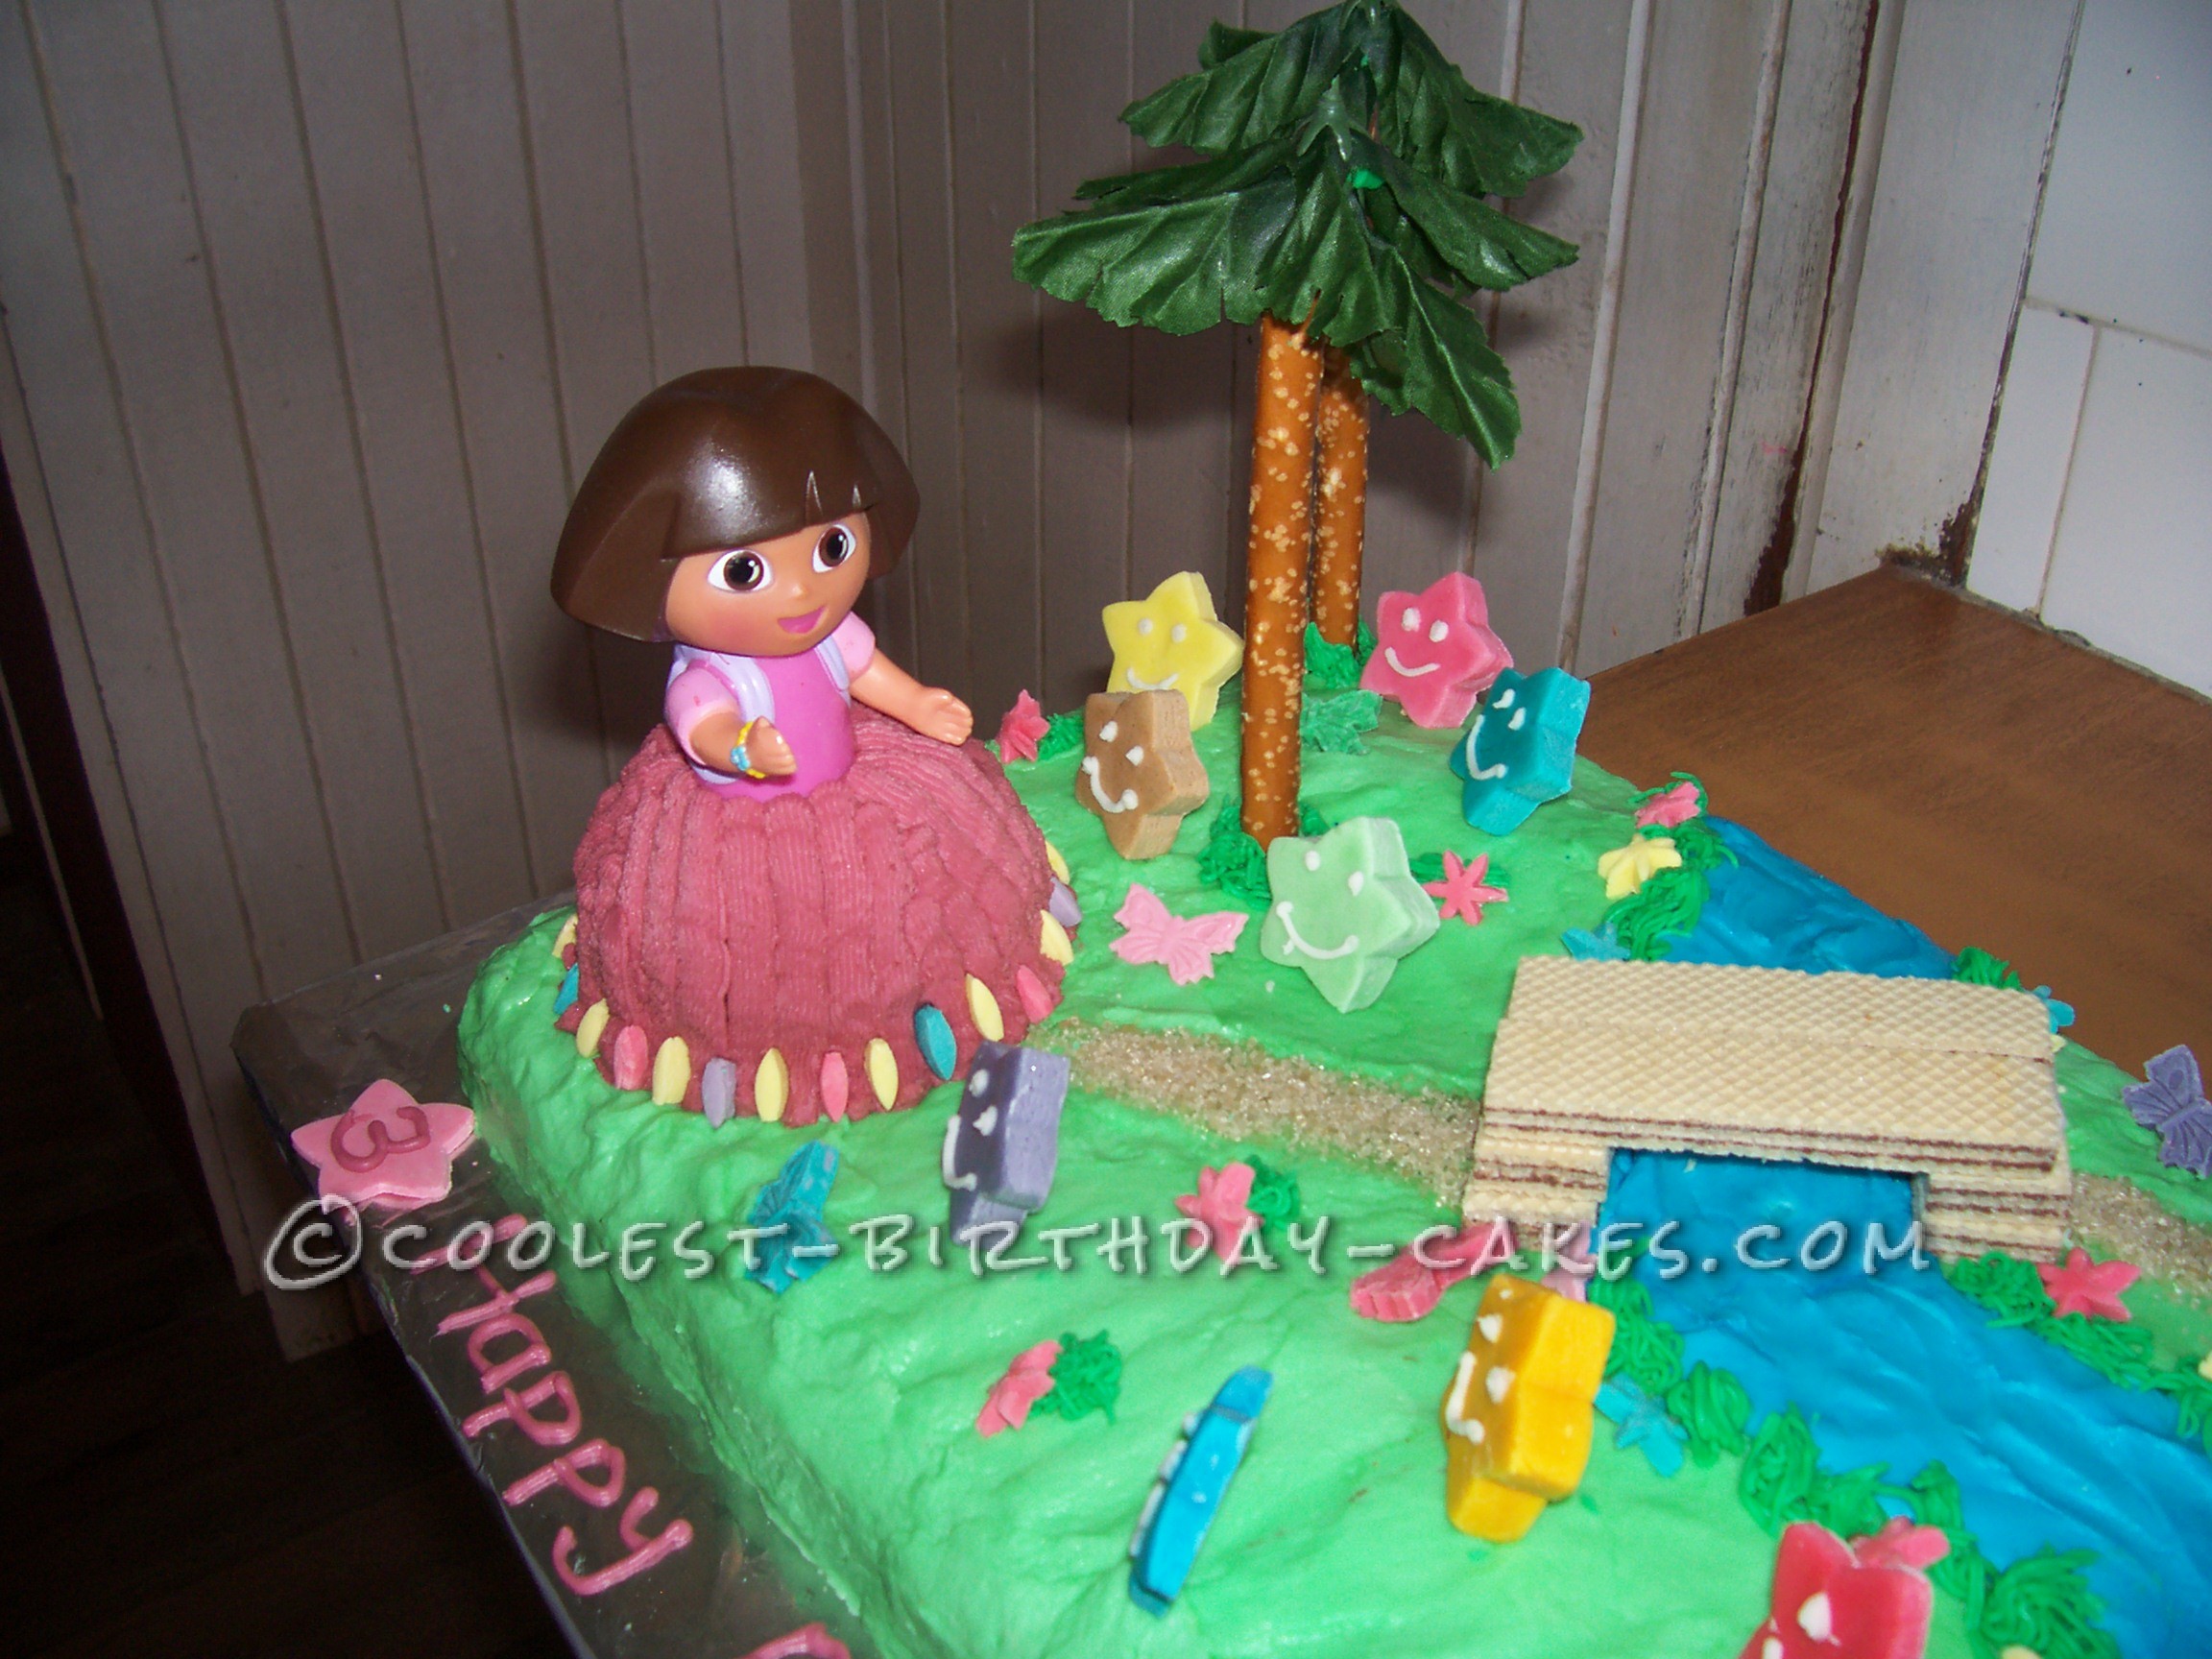 3 Year Old Girl Birthday Cake